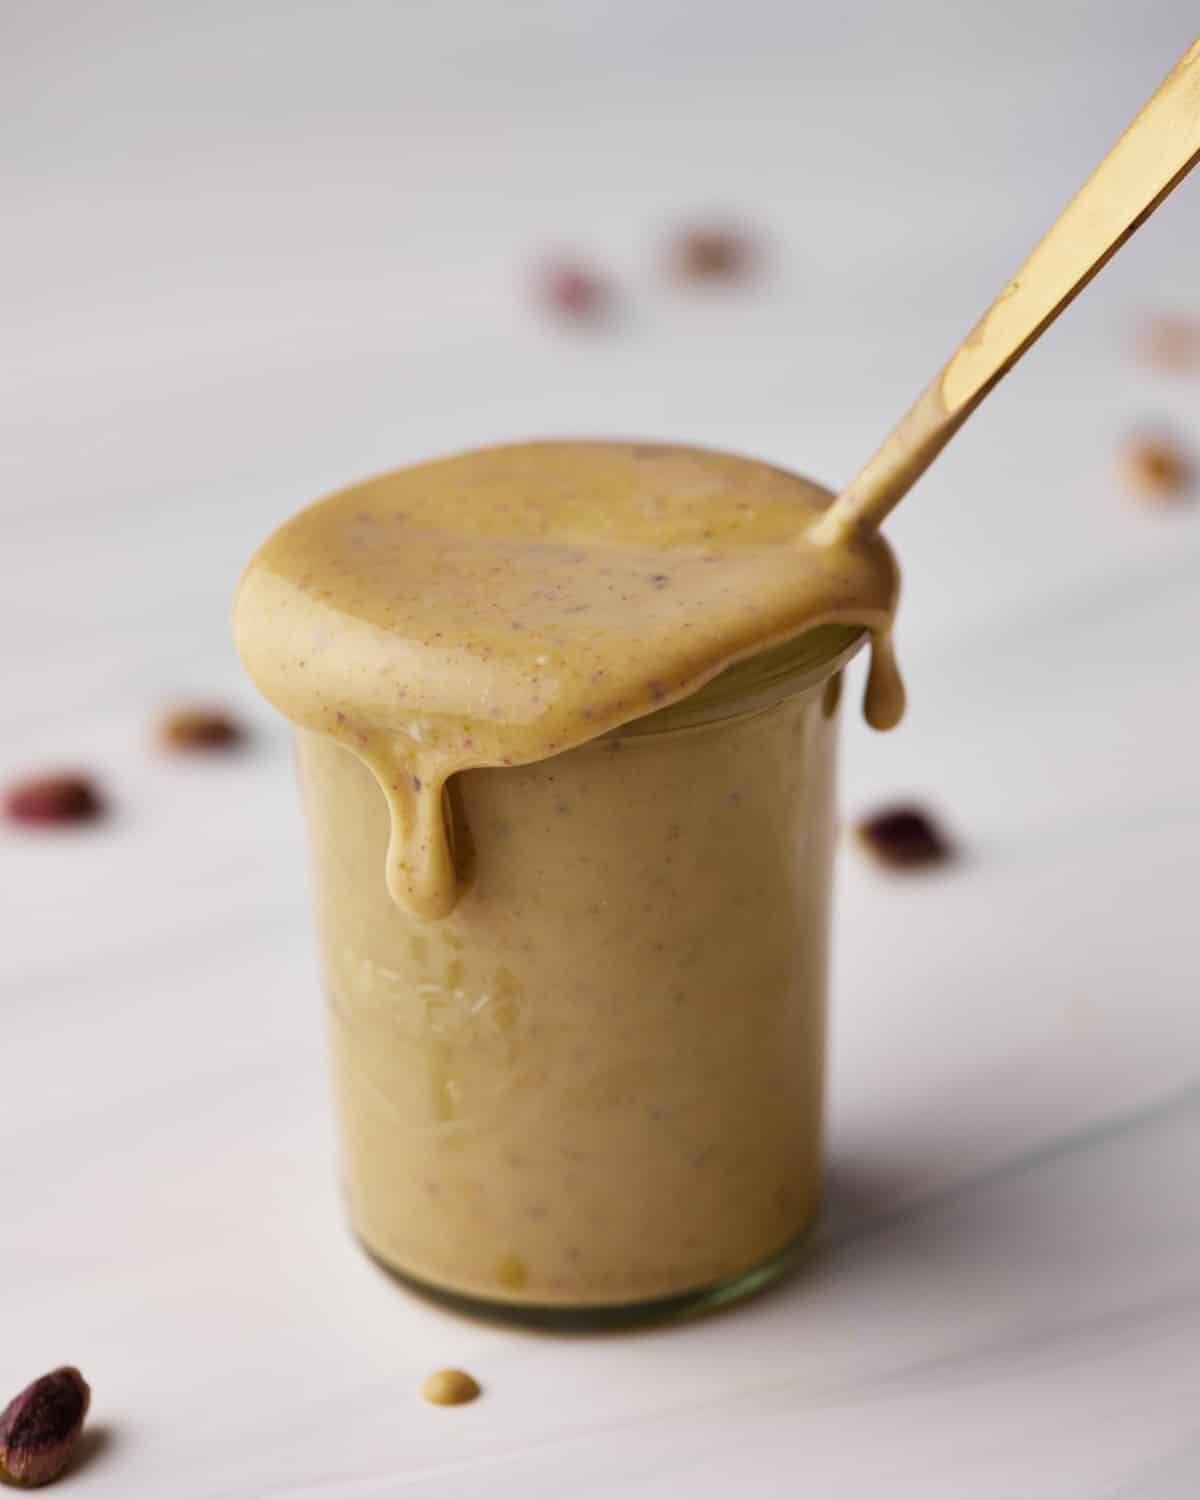 pistachio cream in a jar, dripping over the edge. 